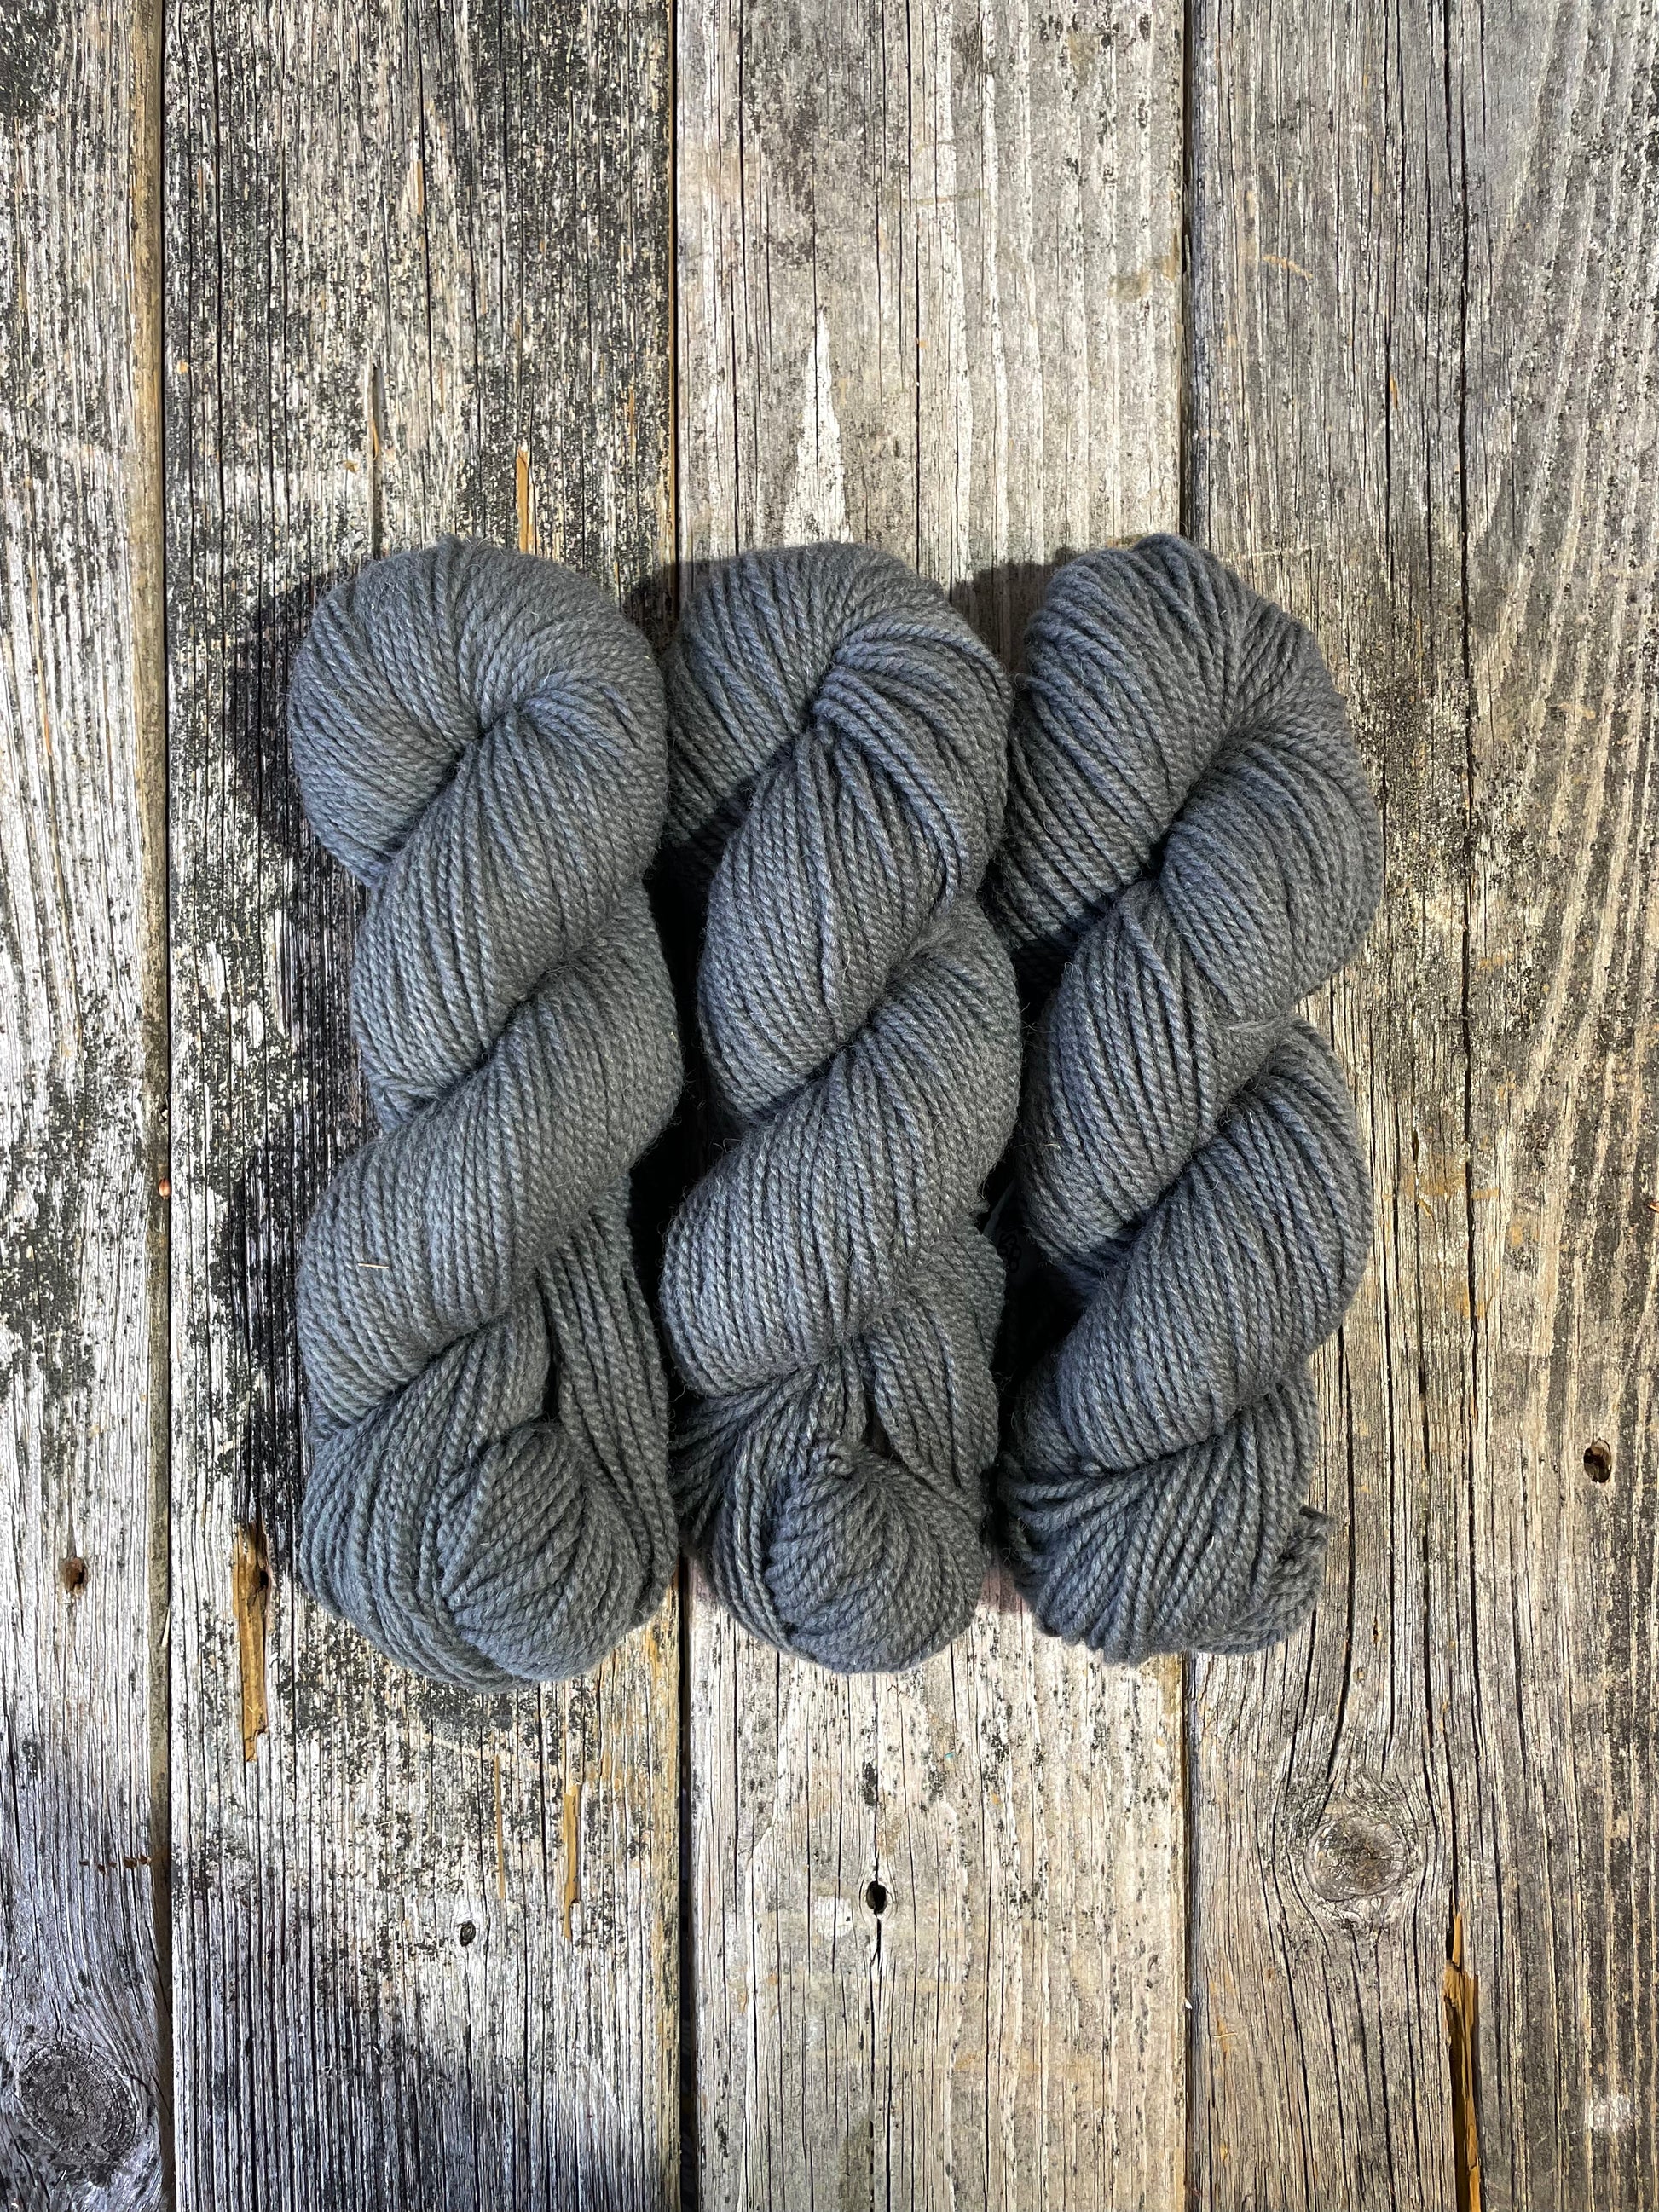 Briggs & Little Heritage: Silver Grey - Maine Yarn & Fiber Supply